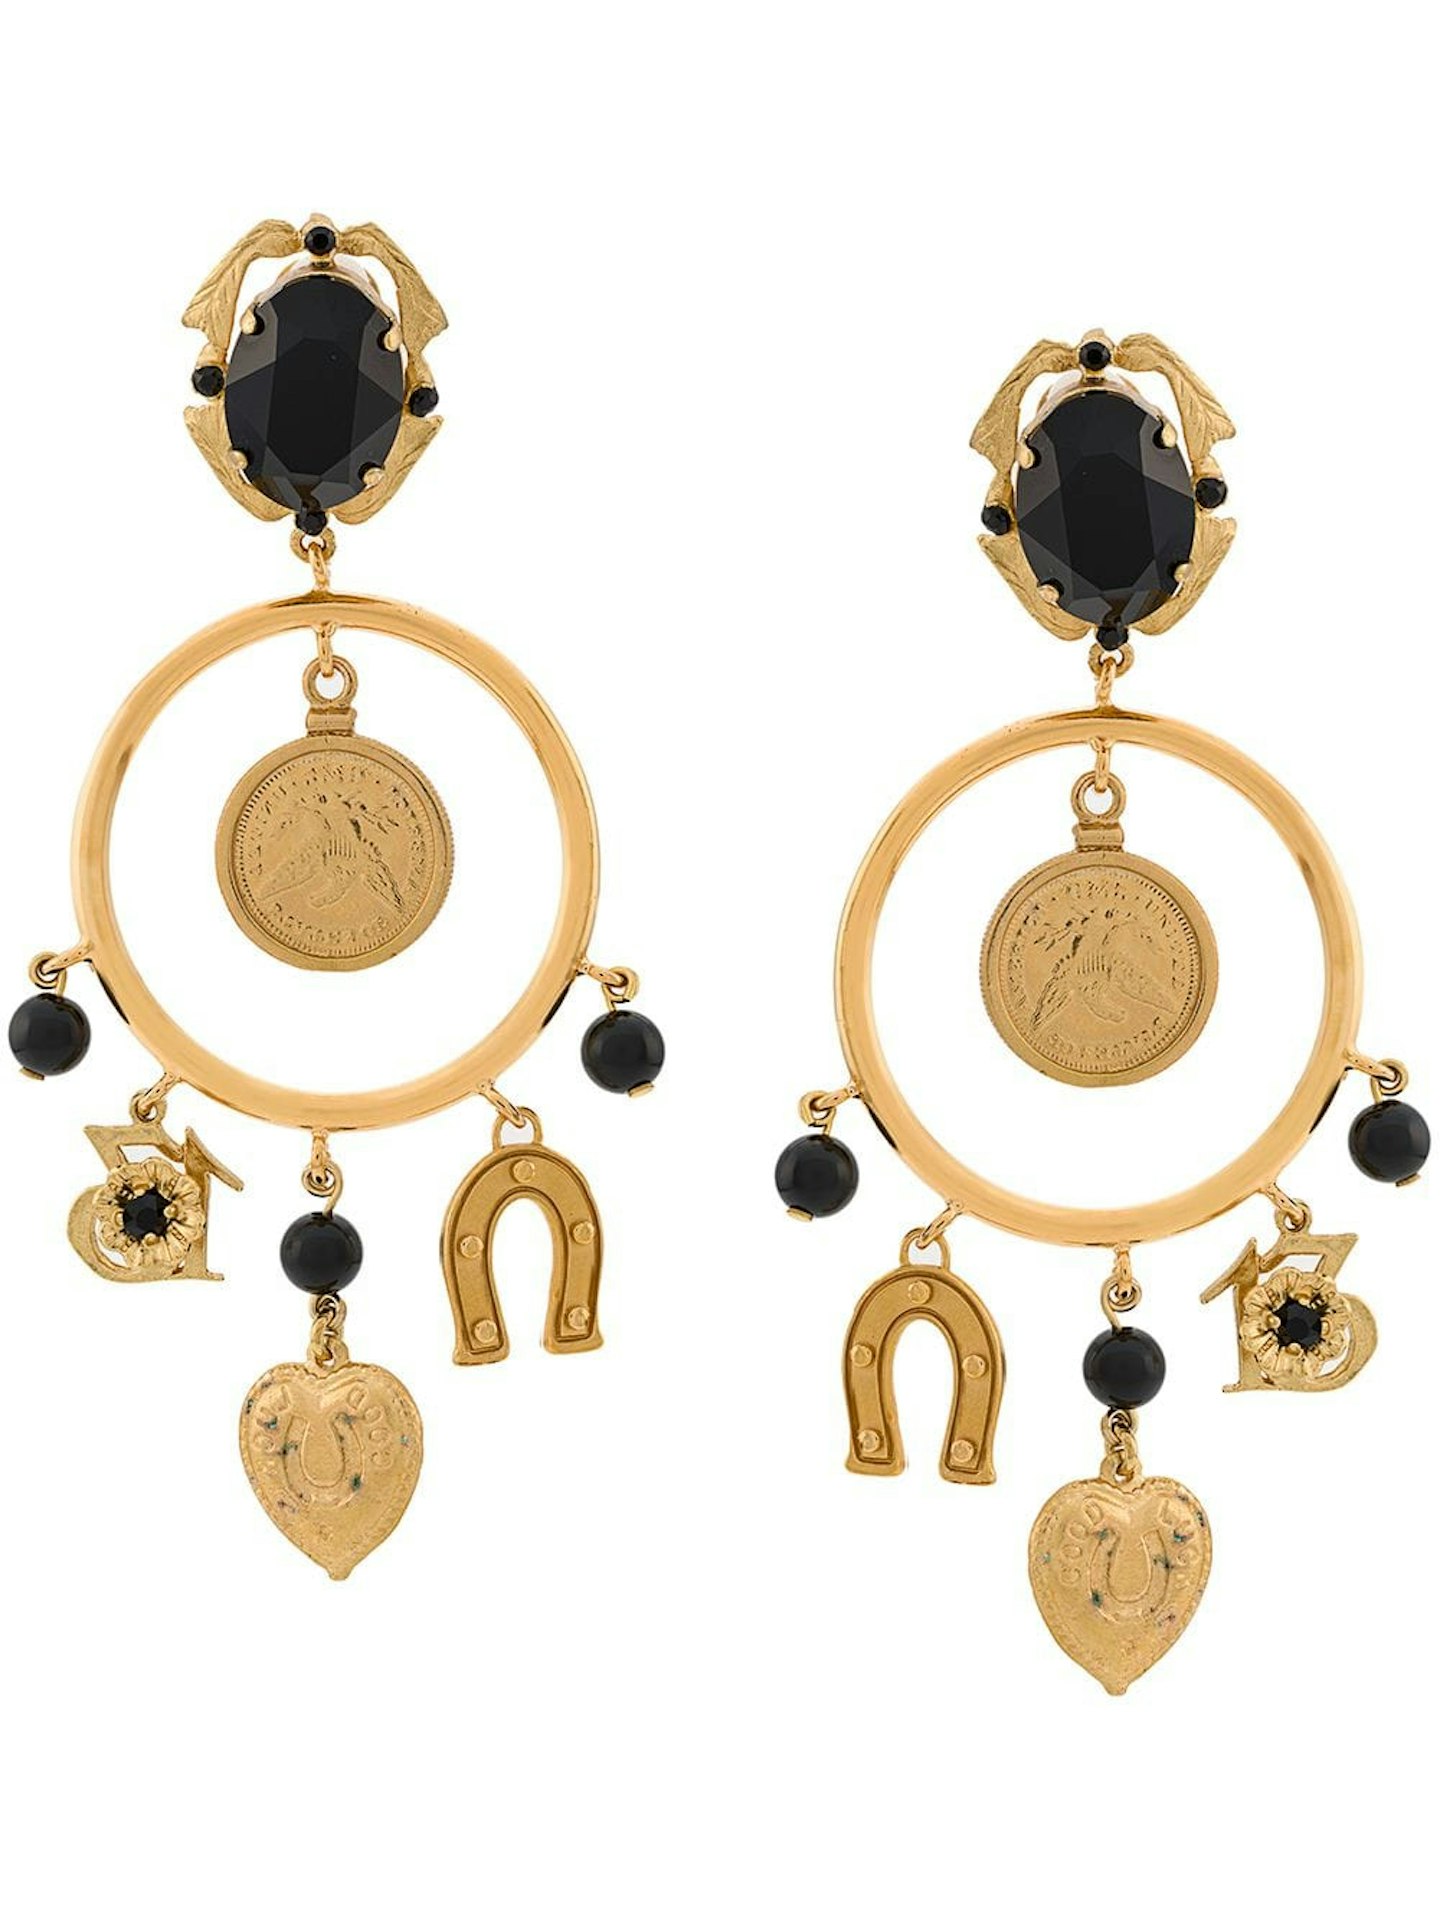 Pisces, Dolce & Gabbana Dream Catcher Earrings, £575